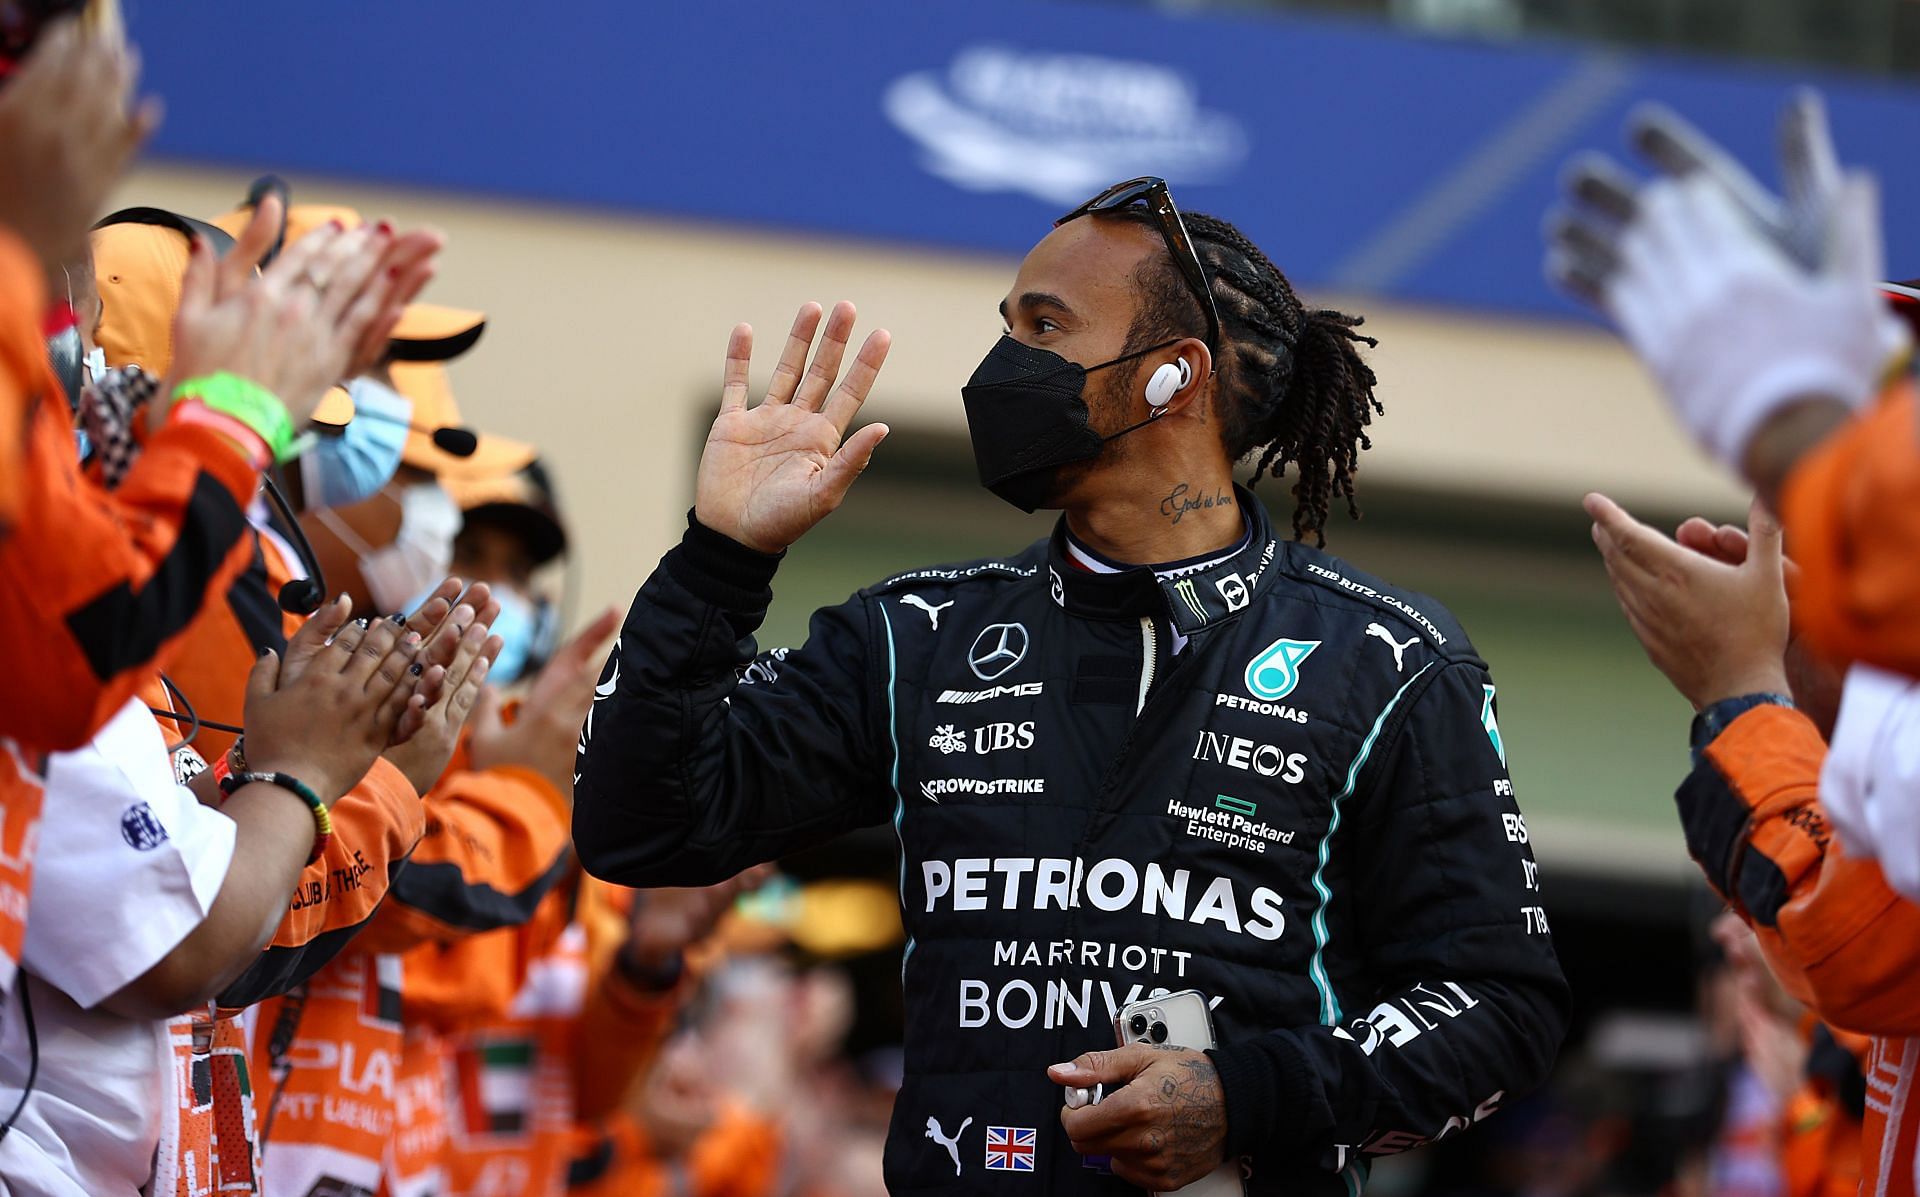 F1 Grand Prix of Abu Dhabi - Lewis Hamilton takes to the Yas Marina circuit